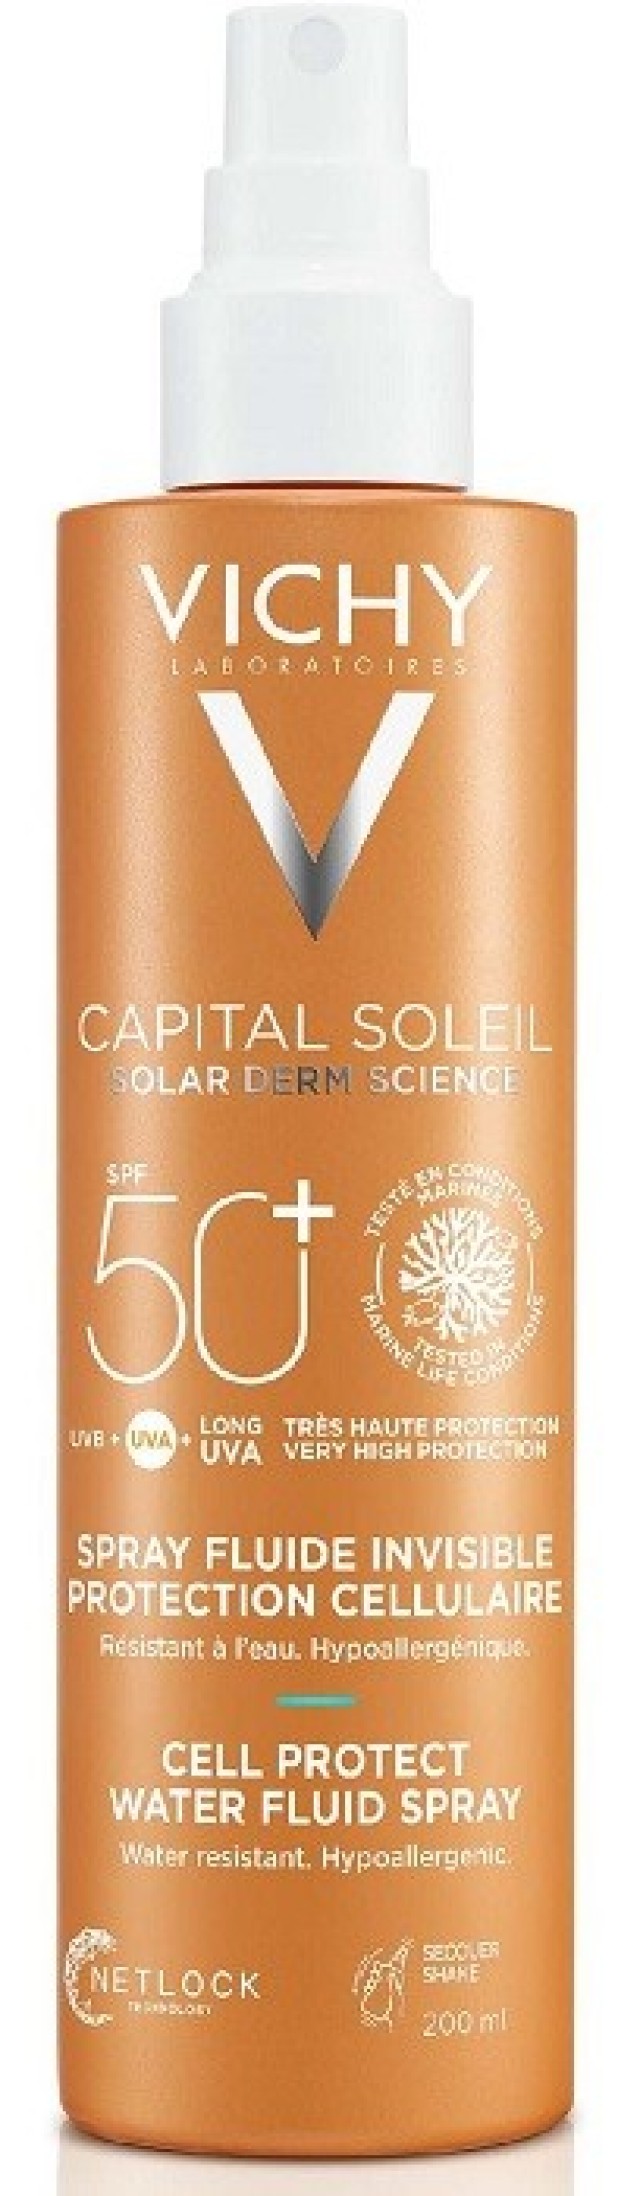 Vichy Capital Soleil Cell Protect Water Fluid Spray spf50+ Αντηλιακό Spray Πολλαπλής Χρήσης 200ml